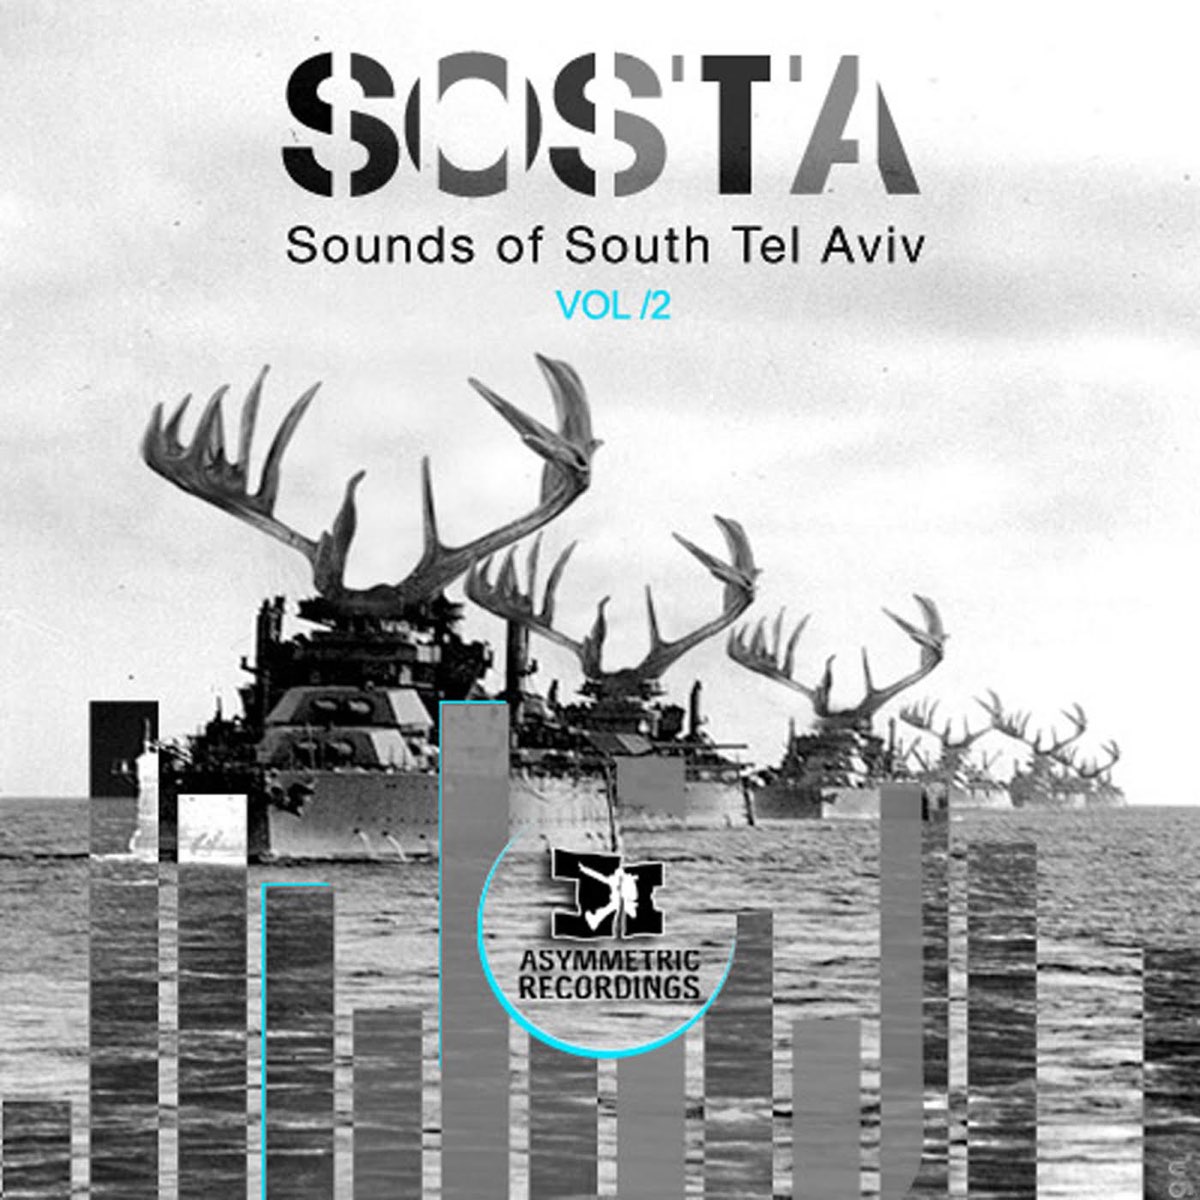 Южный саунд. Южный звук. Sound of the South. Sounds of the 2a03 mp3. Sounds 2.0